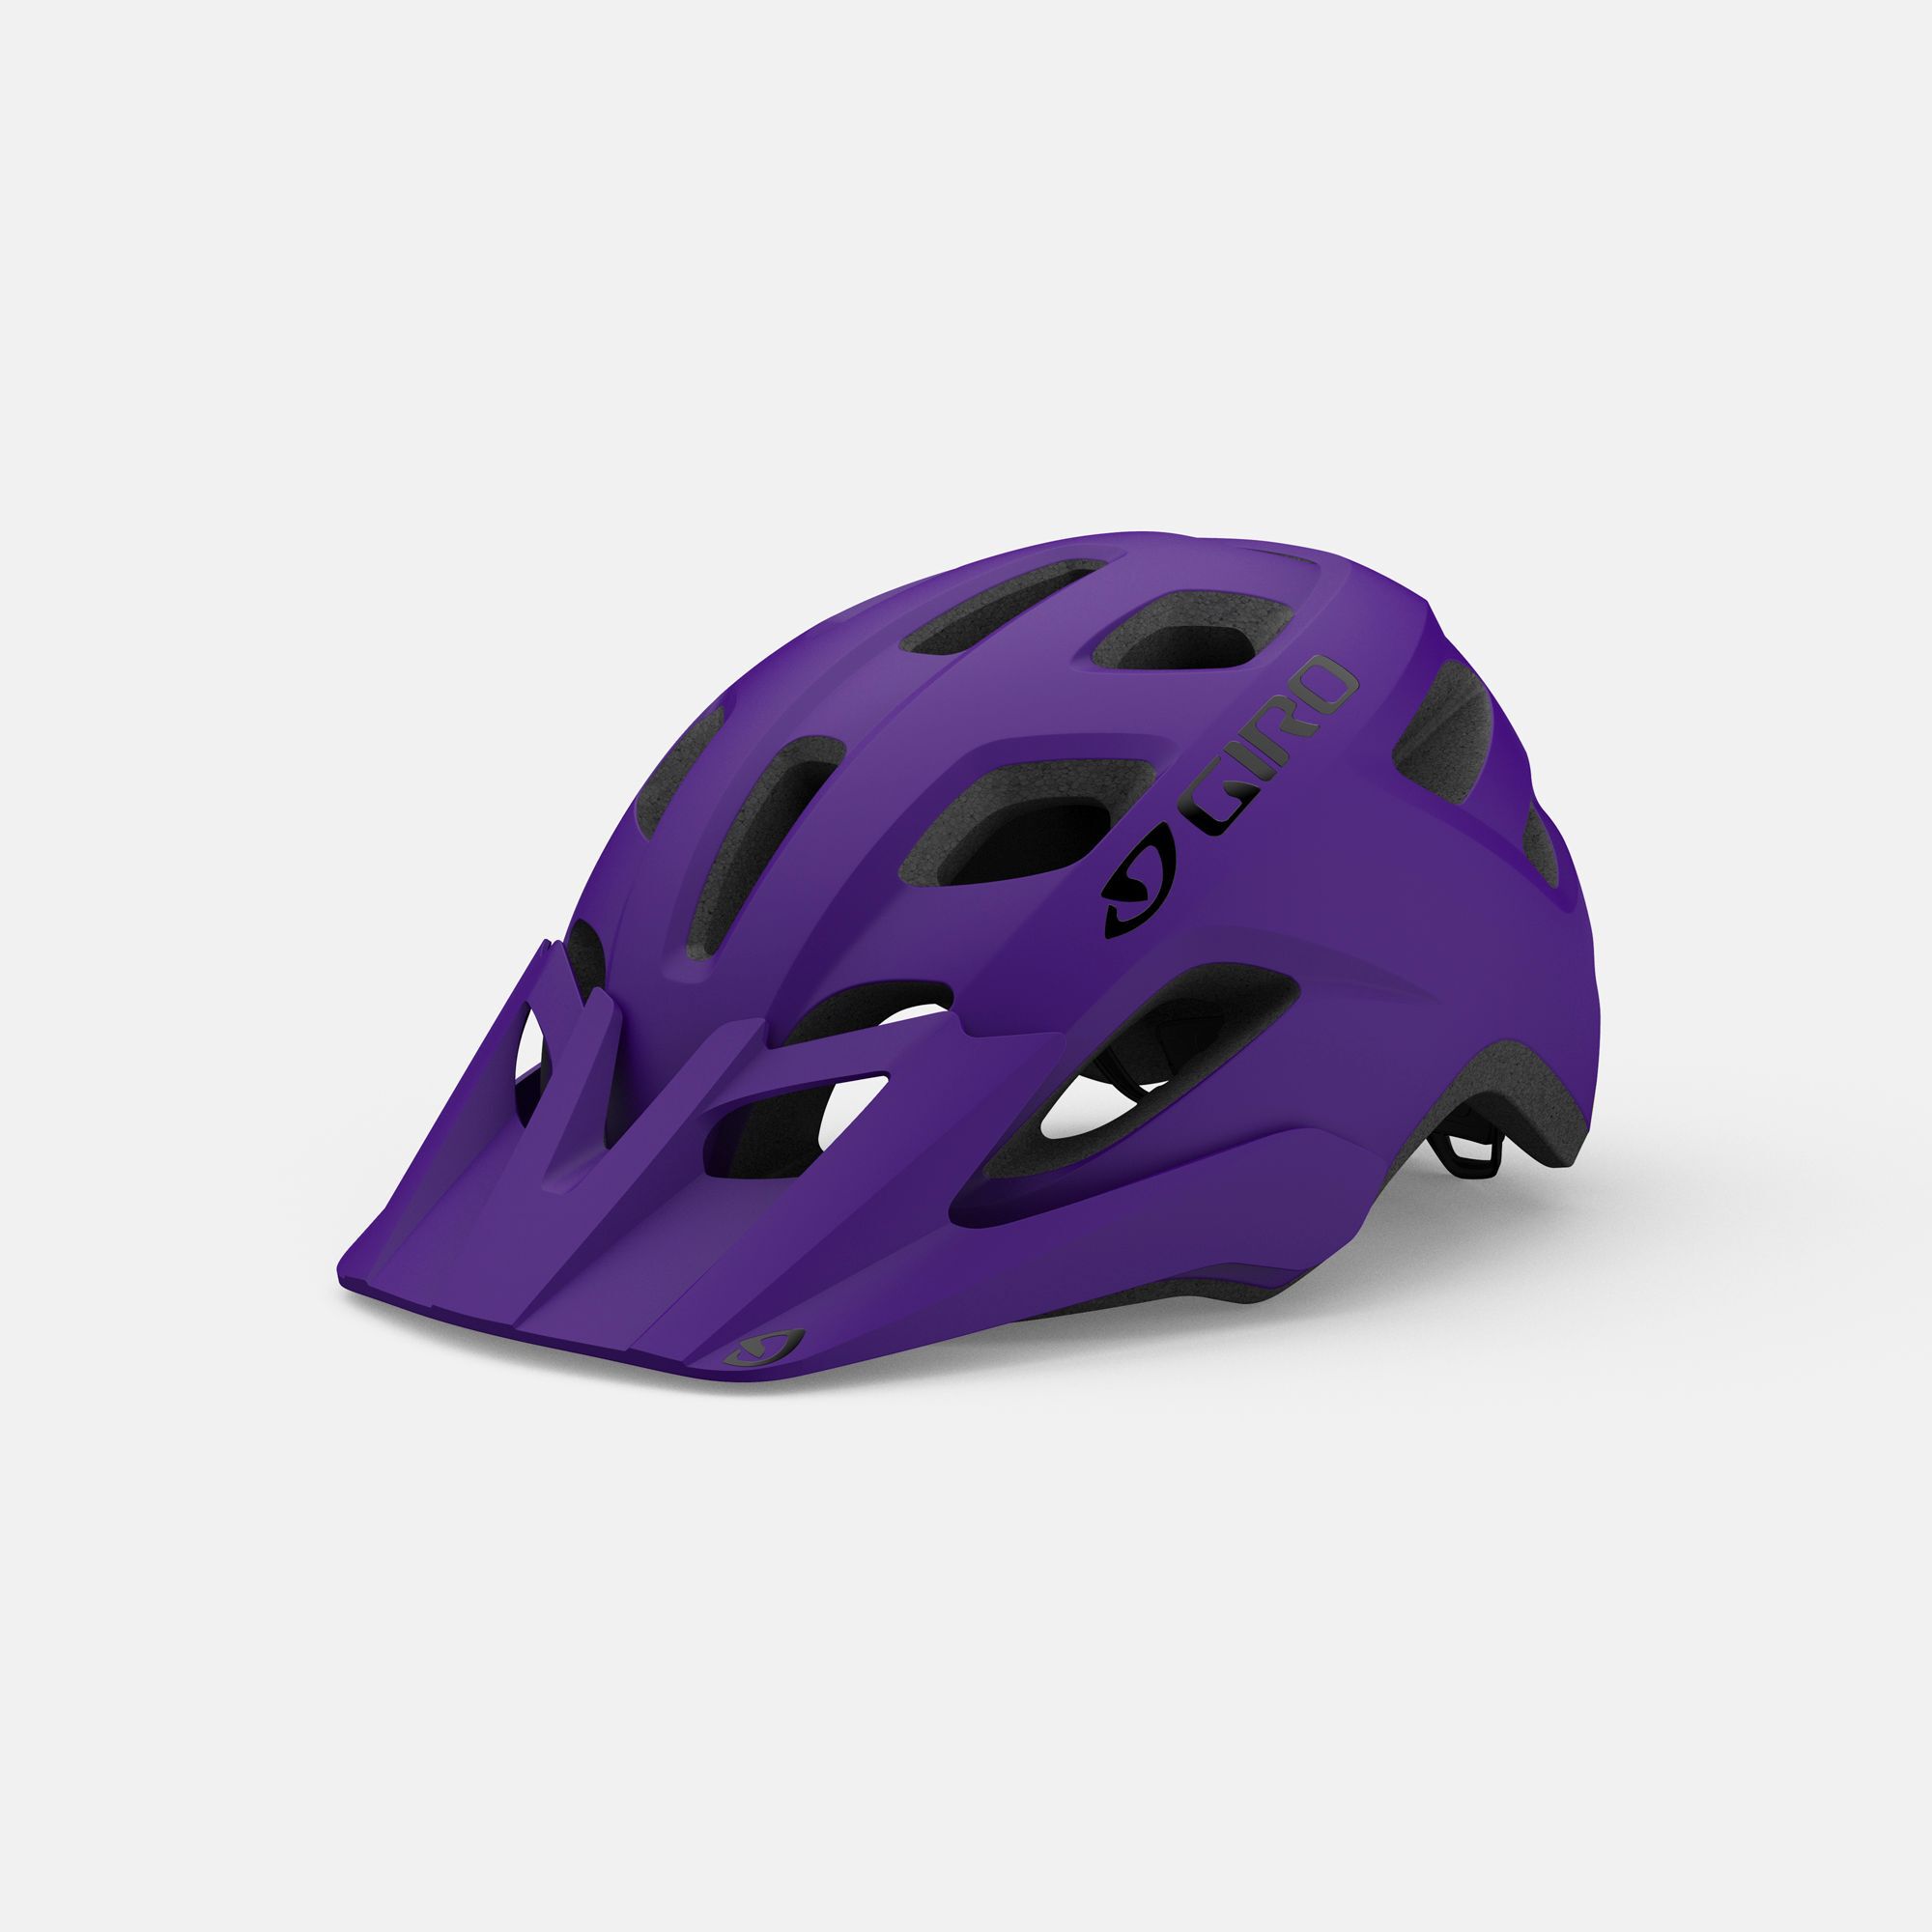 50-57cm Giro Tremor MIPS Youth Visor MTB Bike Cycling Helmet 